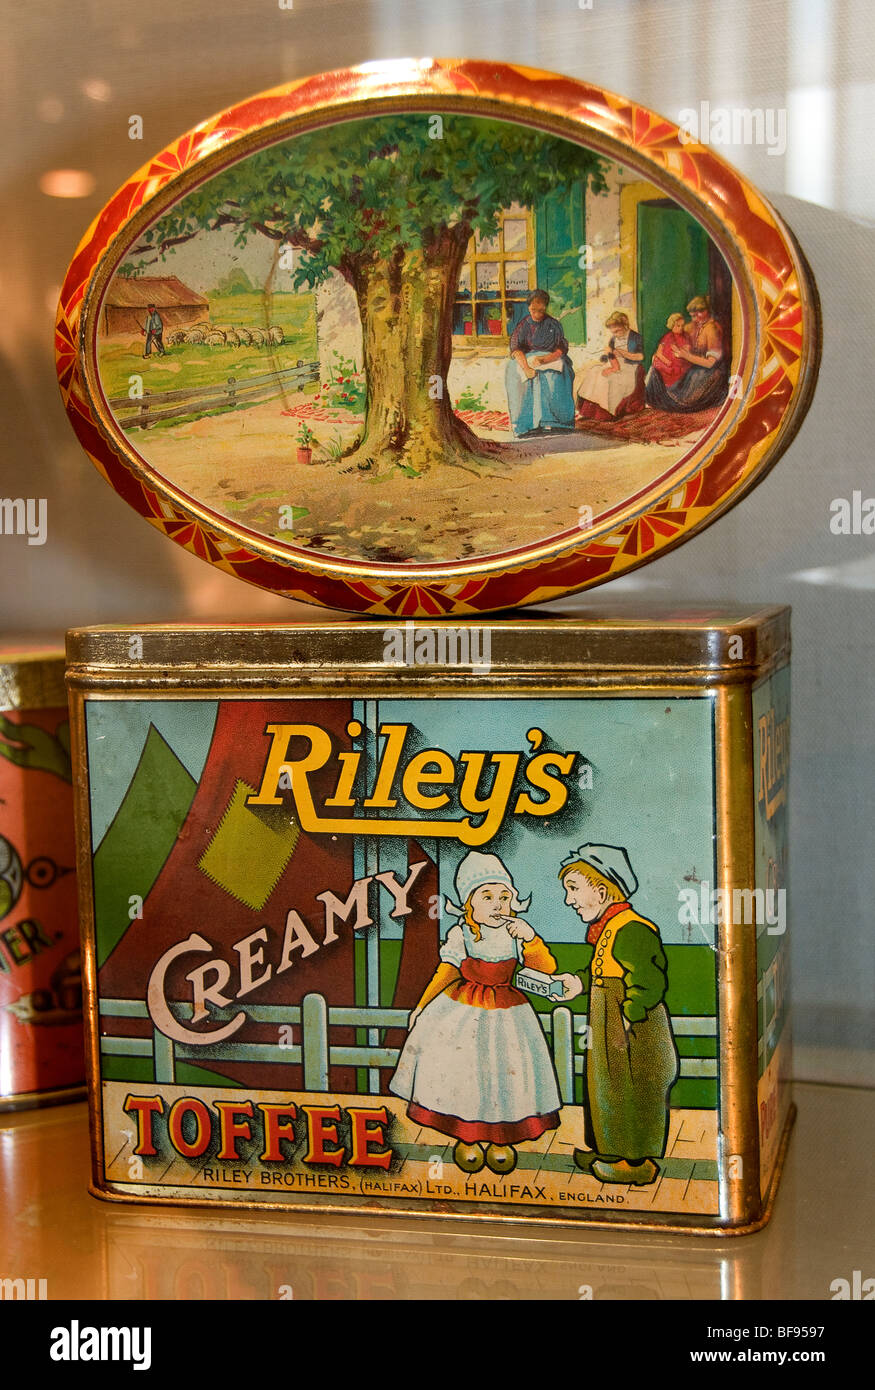 Paesi Bassi Rileys cremoso Toffee può inglese Foto Stock